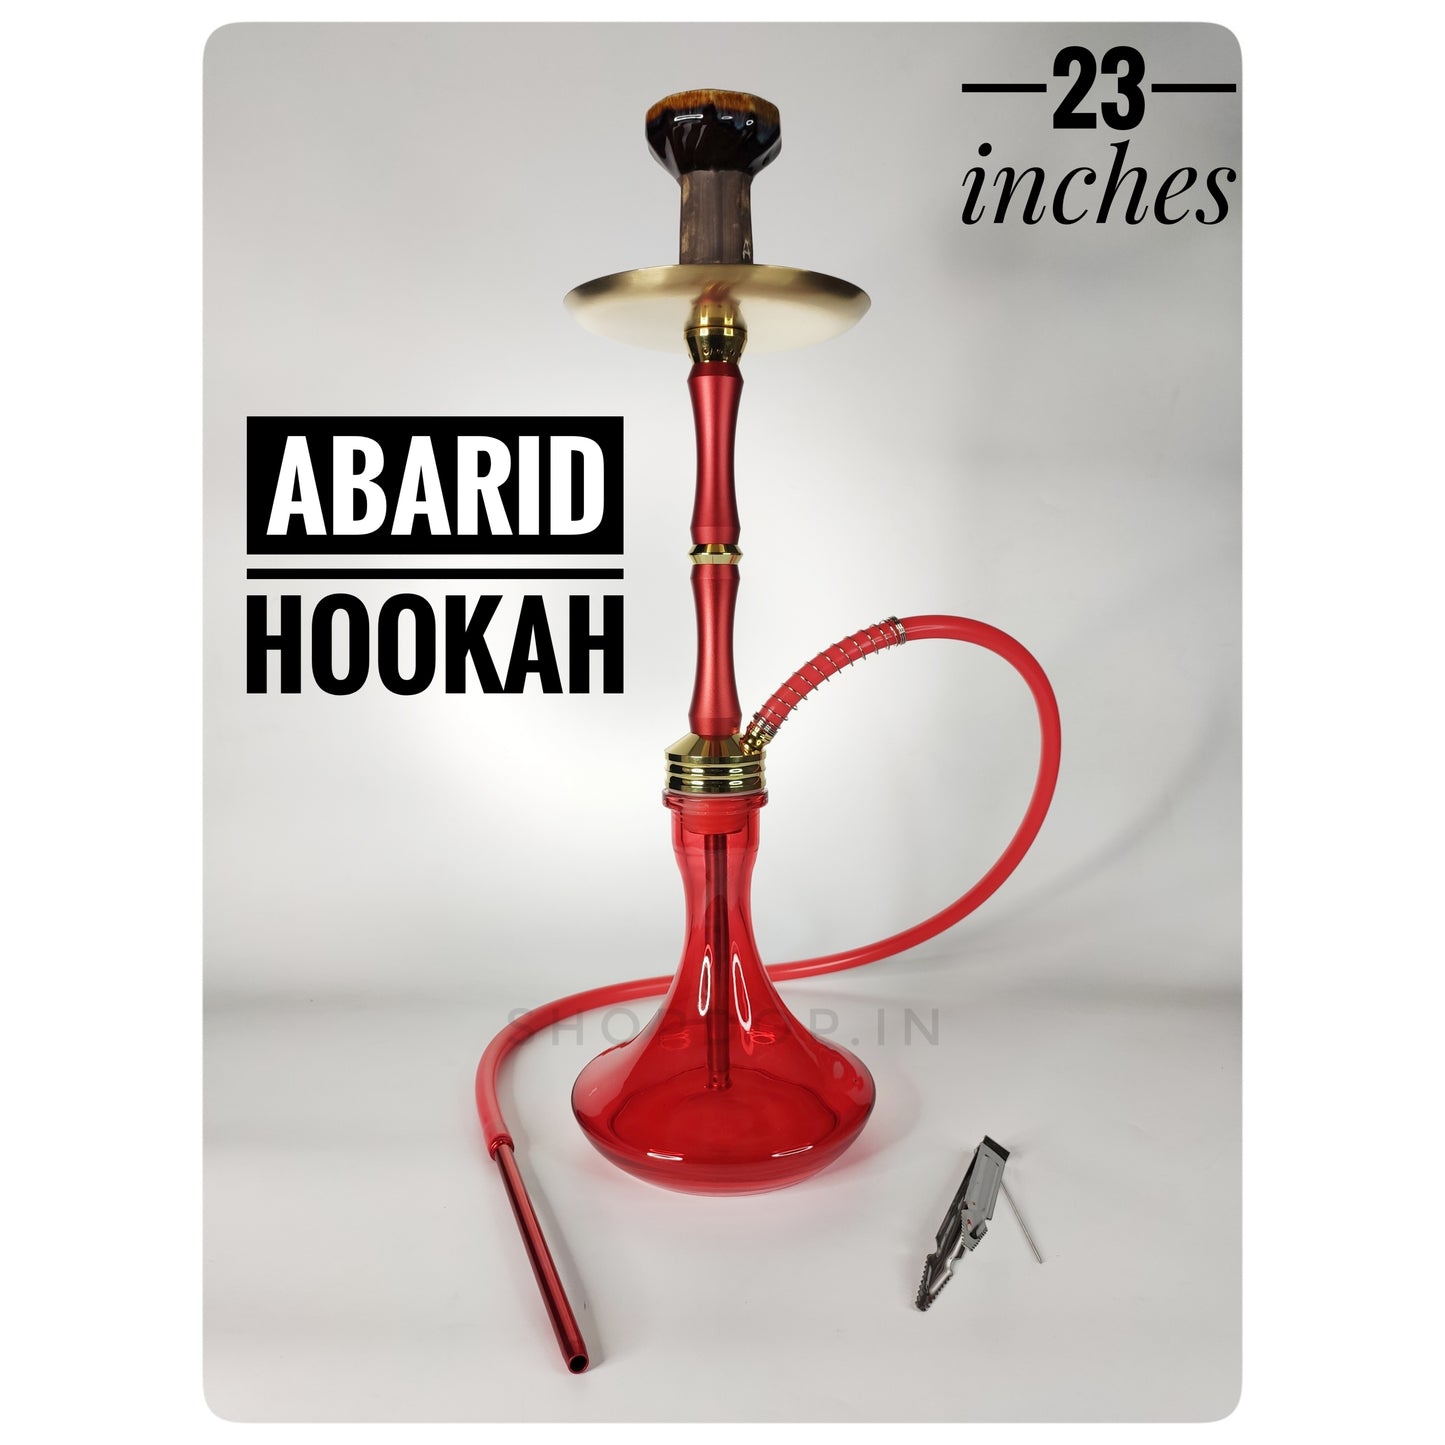 Abarid Hookah - X Function Technology